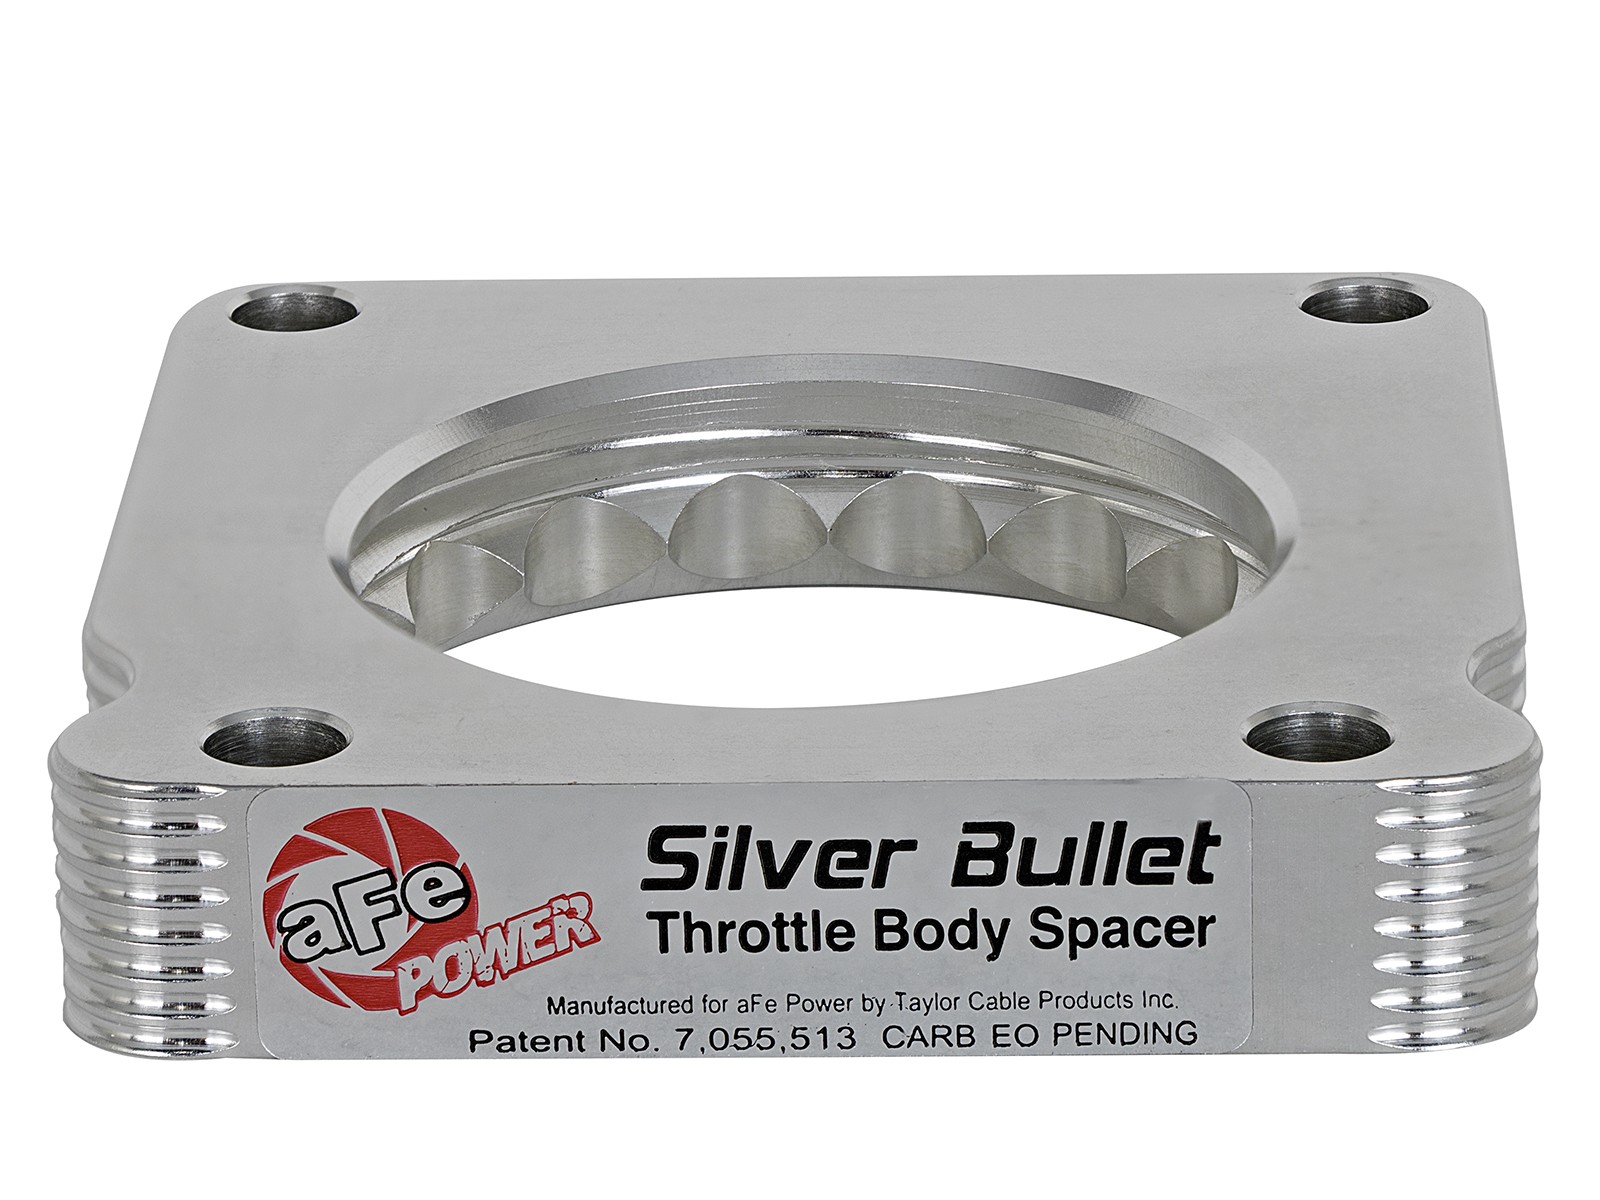 Silver Bullet Throttle Body Spacer